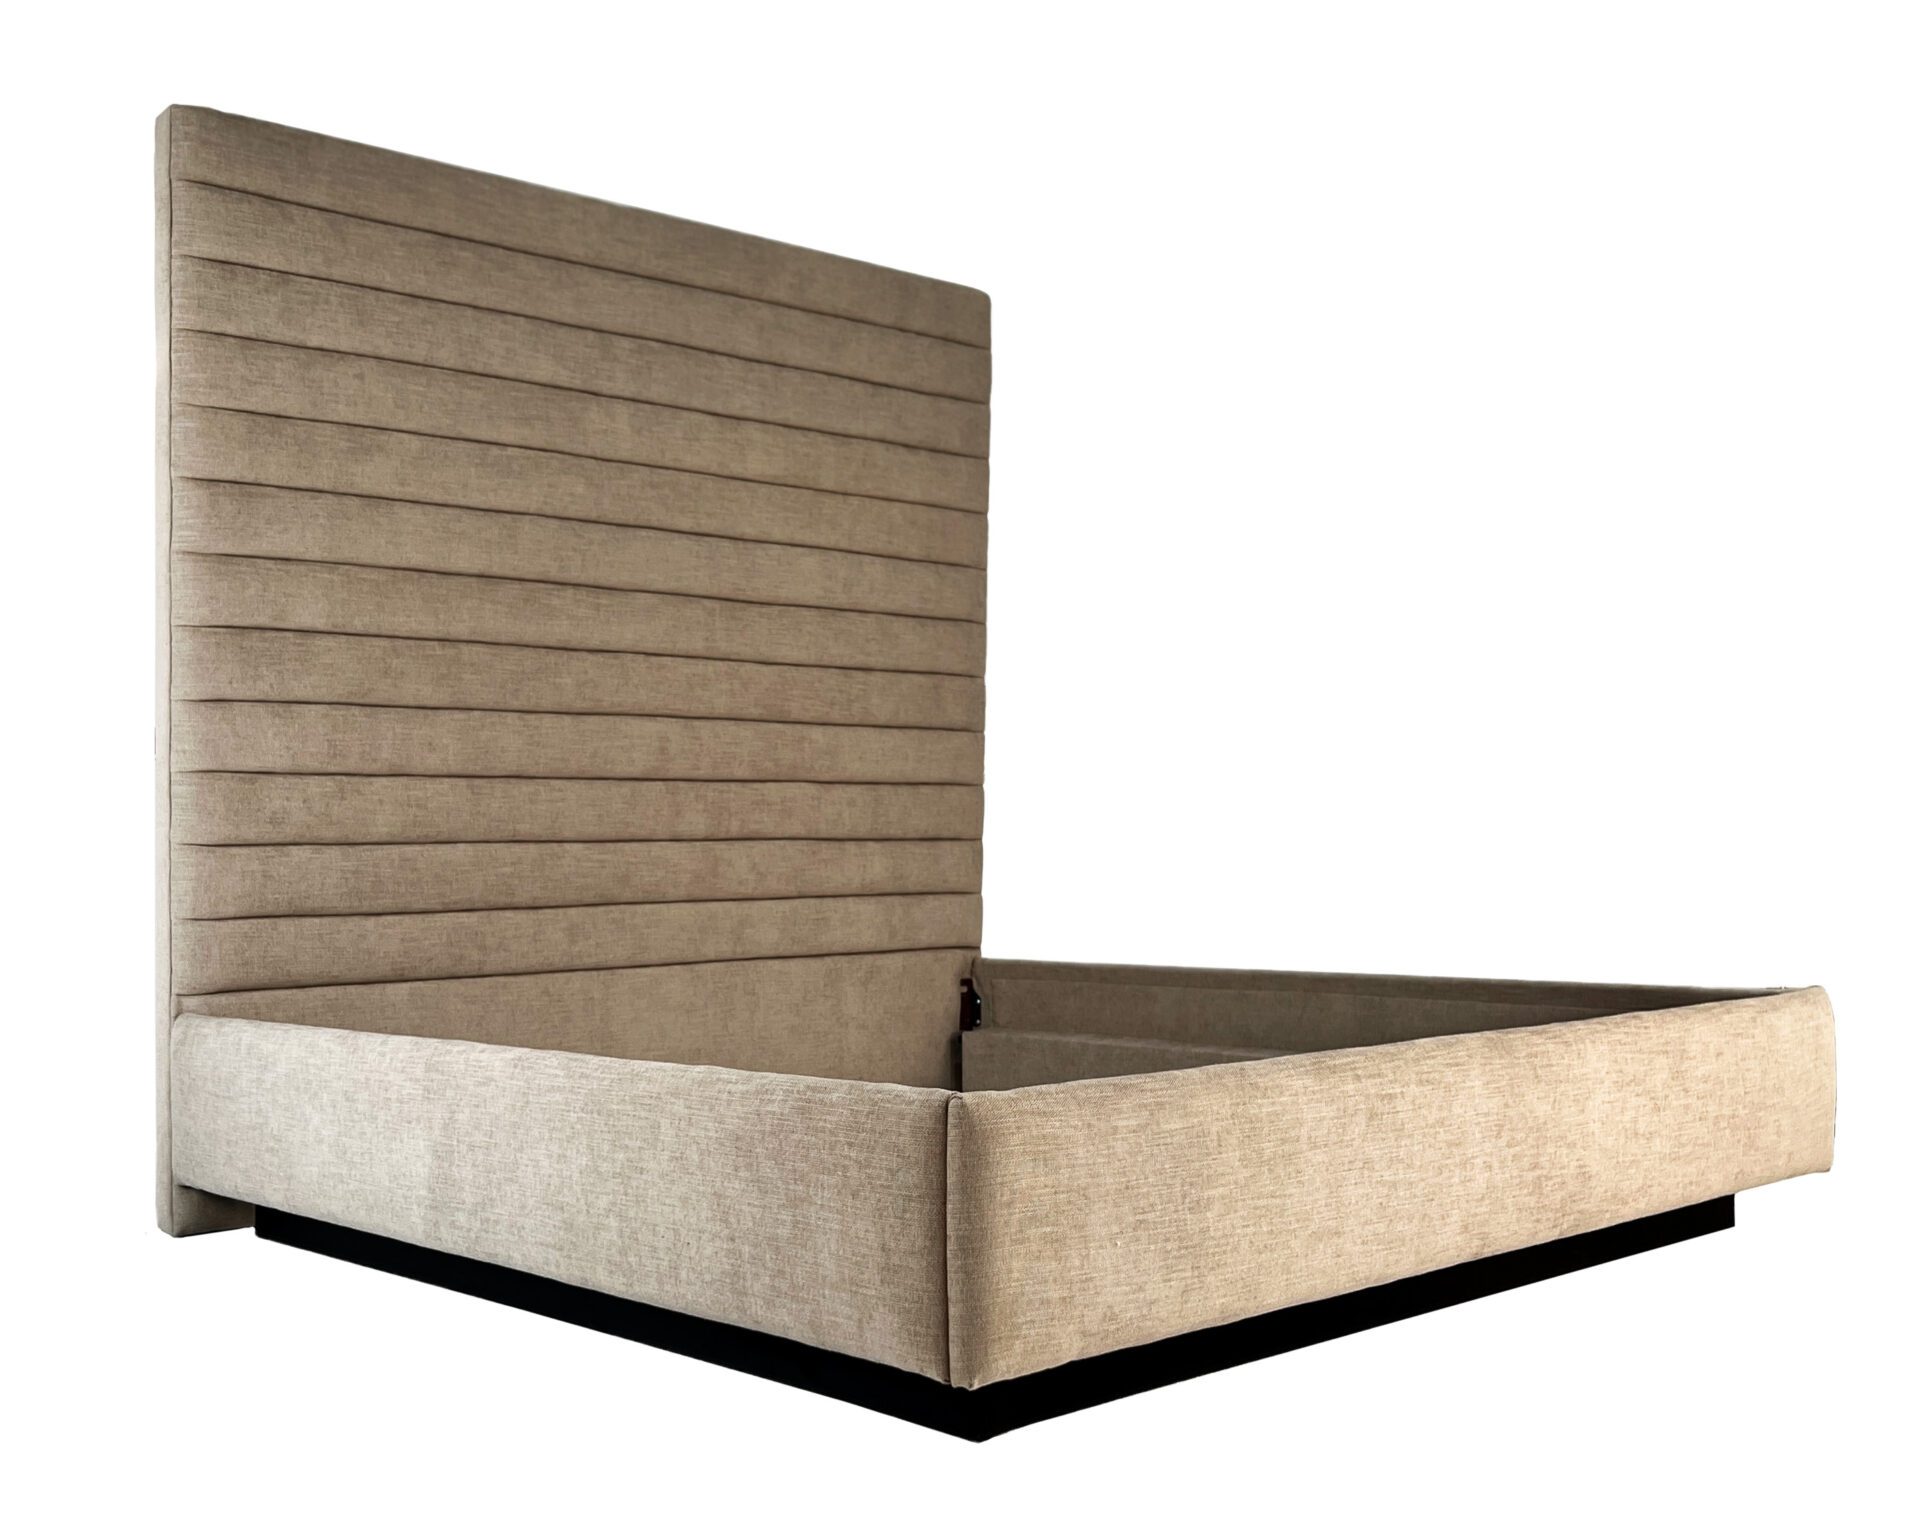 Ballard-custom-upholstered-headboards-bed-wall-mounted-freestanding-blend-home-furnishings-interior-designer-main